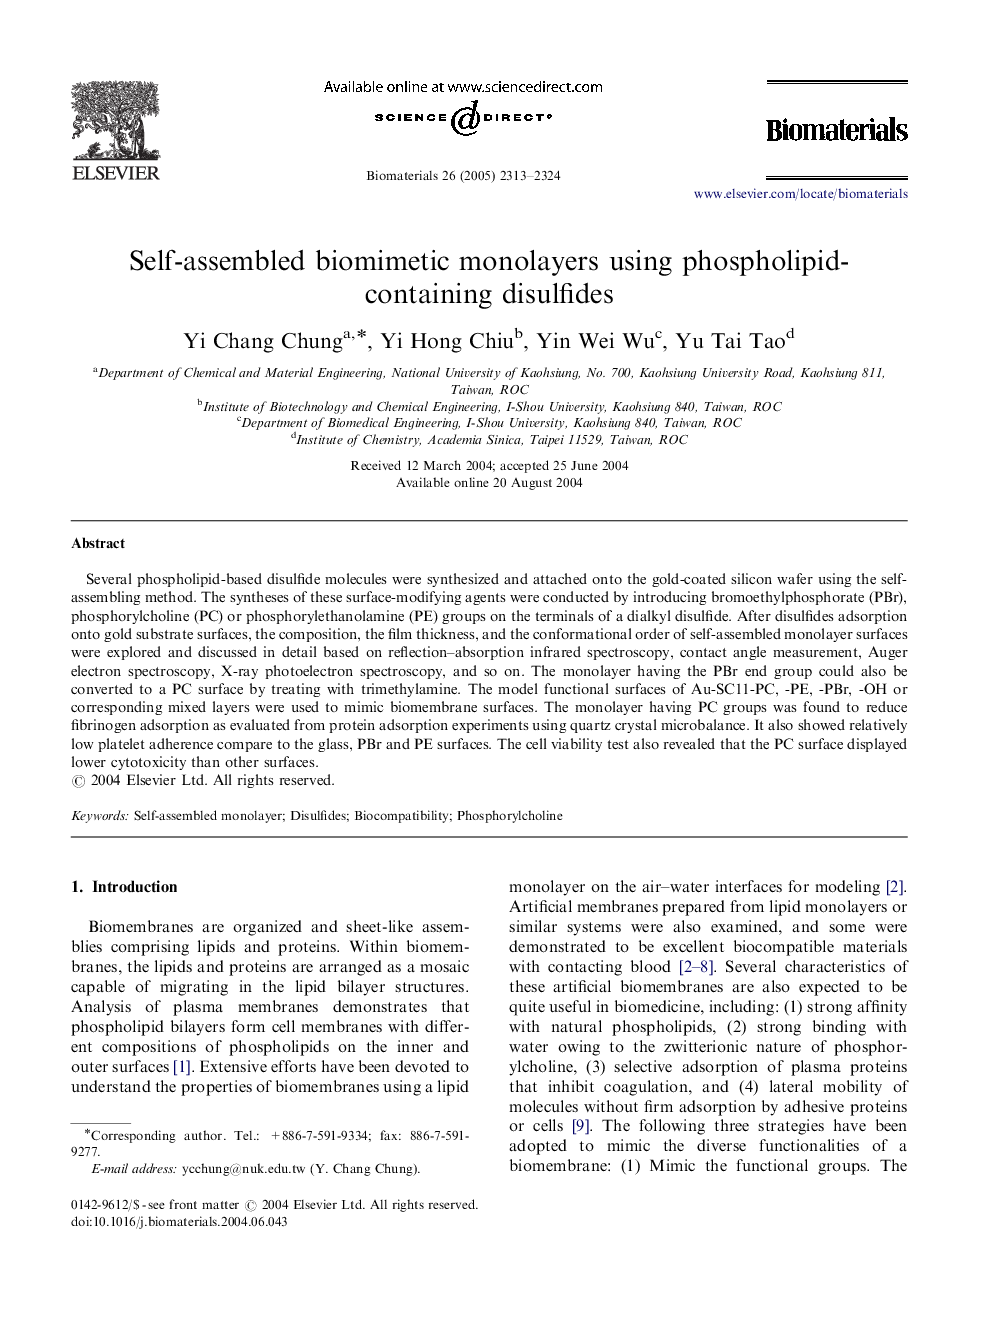 Self-assembled biomimetic monolayers using phospholipid-containing disulfides